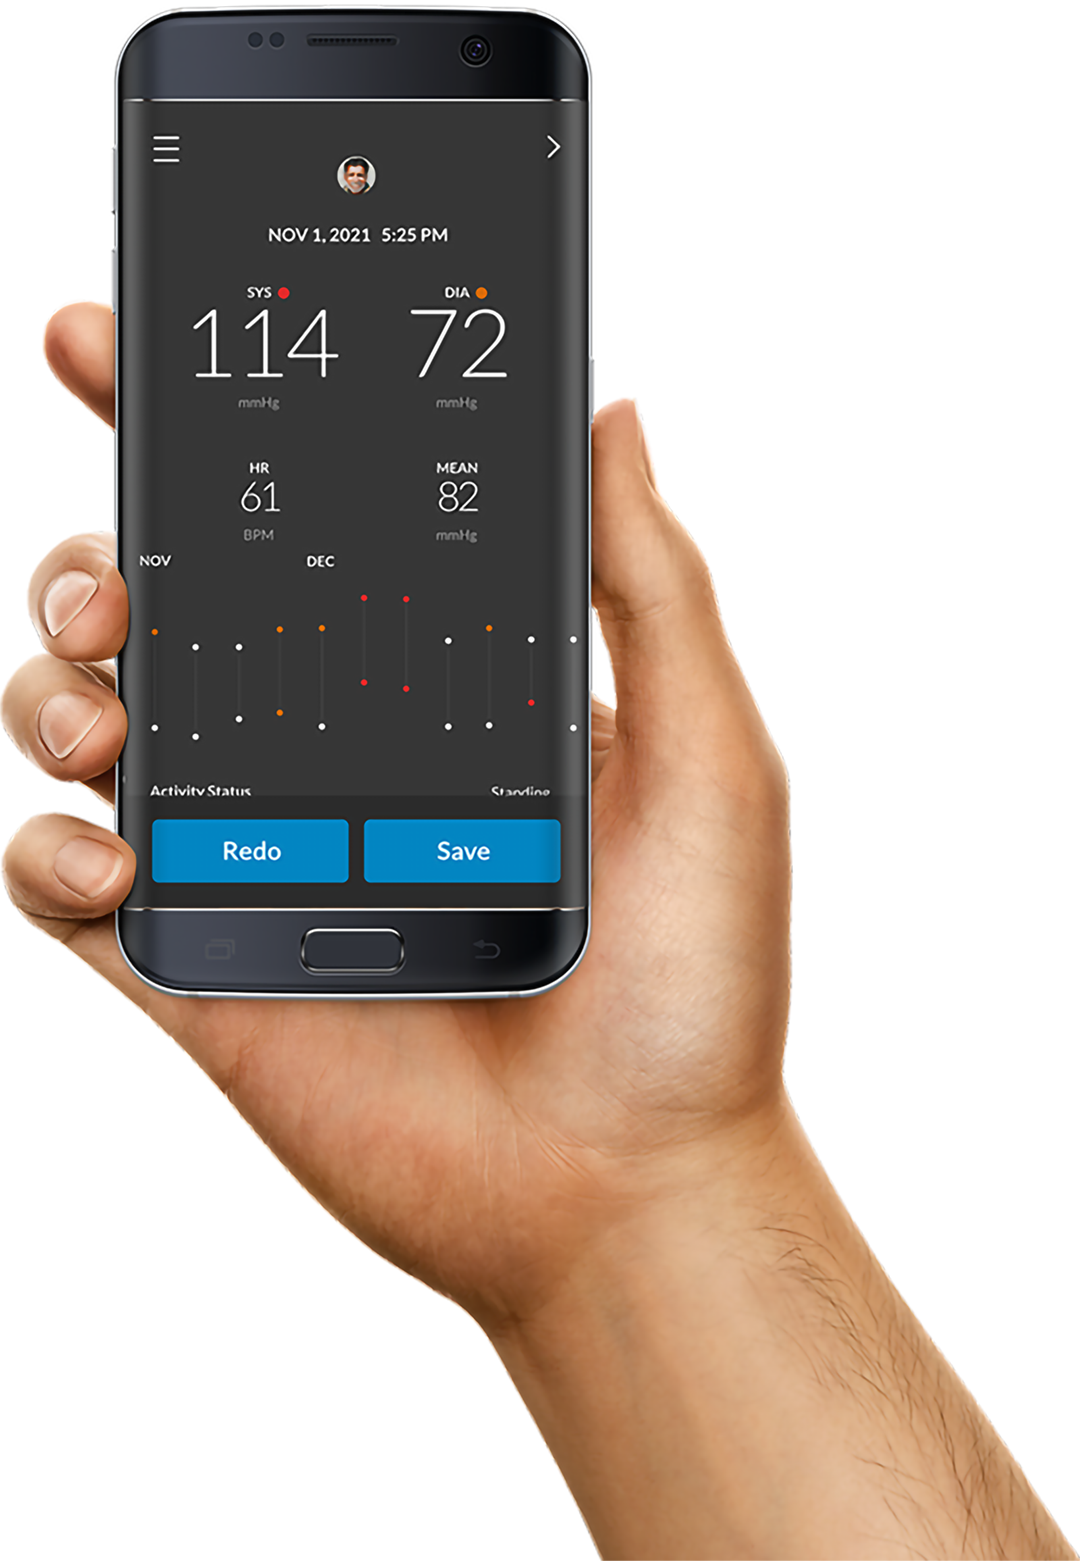 Biospectal OptiBP™ smartphone app provides clinical-grade blood pressure measurement utilizing transdermal optical sensing with only a fingertip applied to a smartphone camera lens